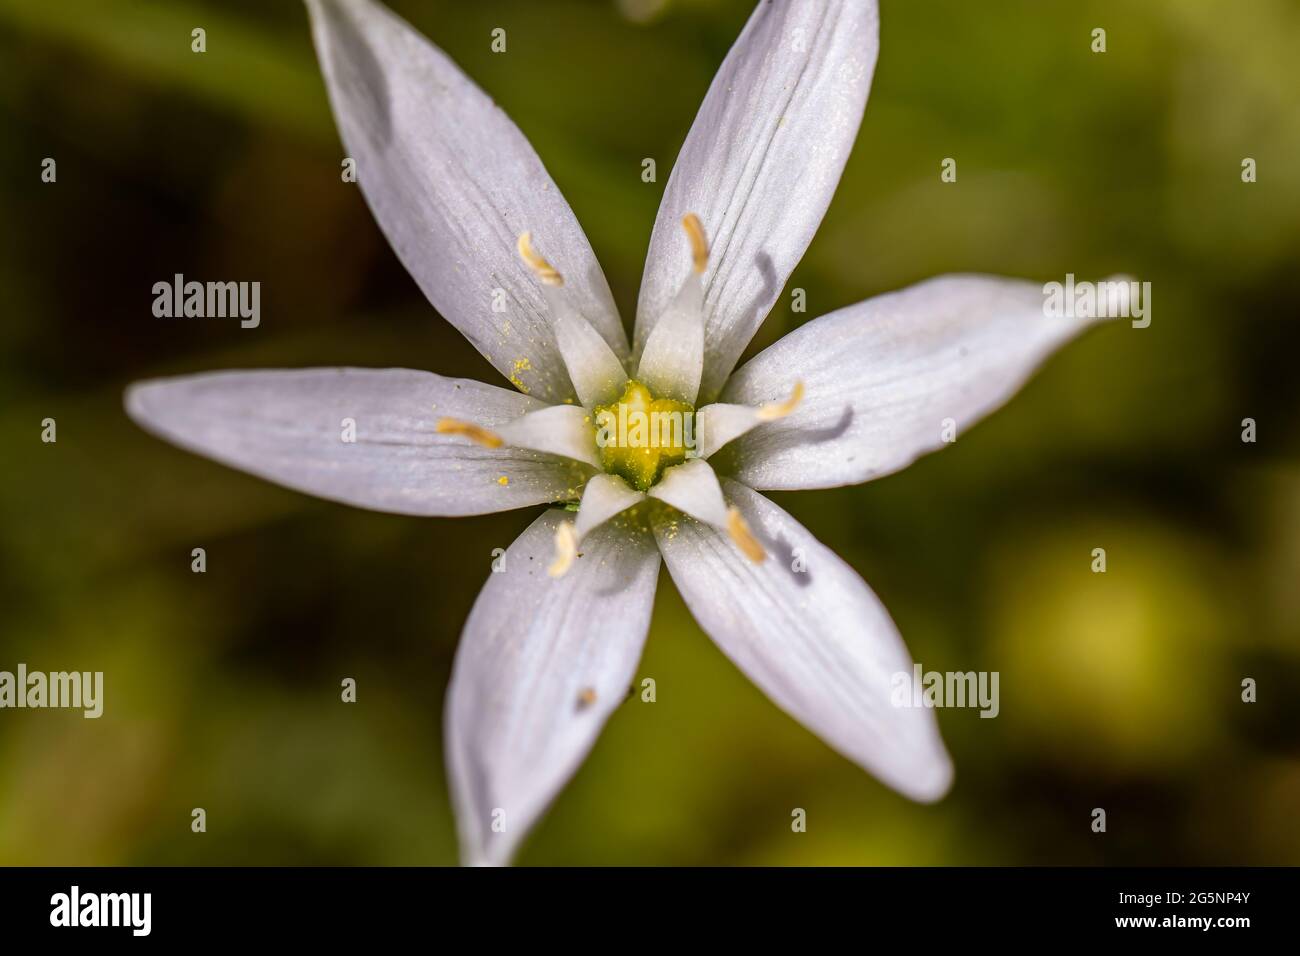 Ornithogalum flower in the garden Stock Photo